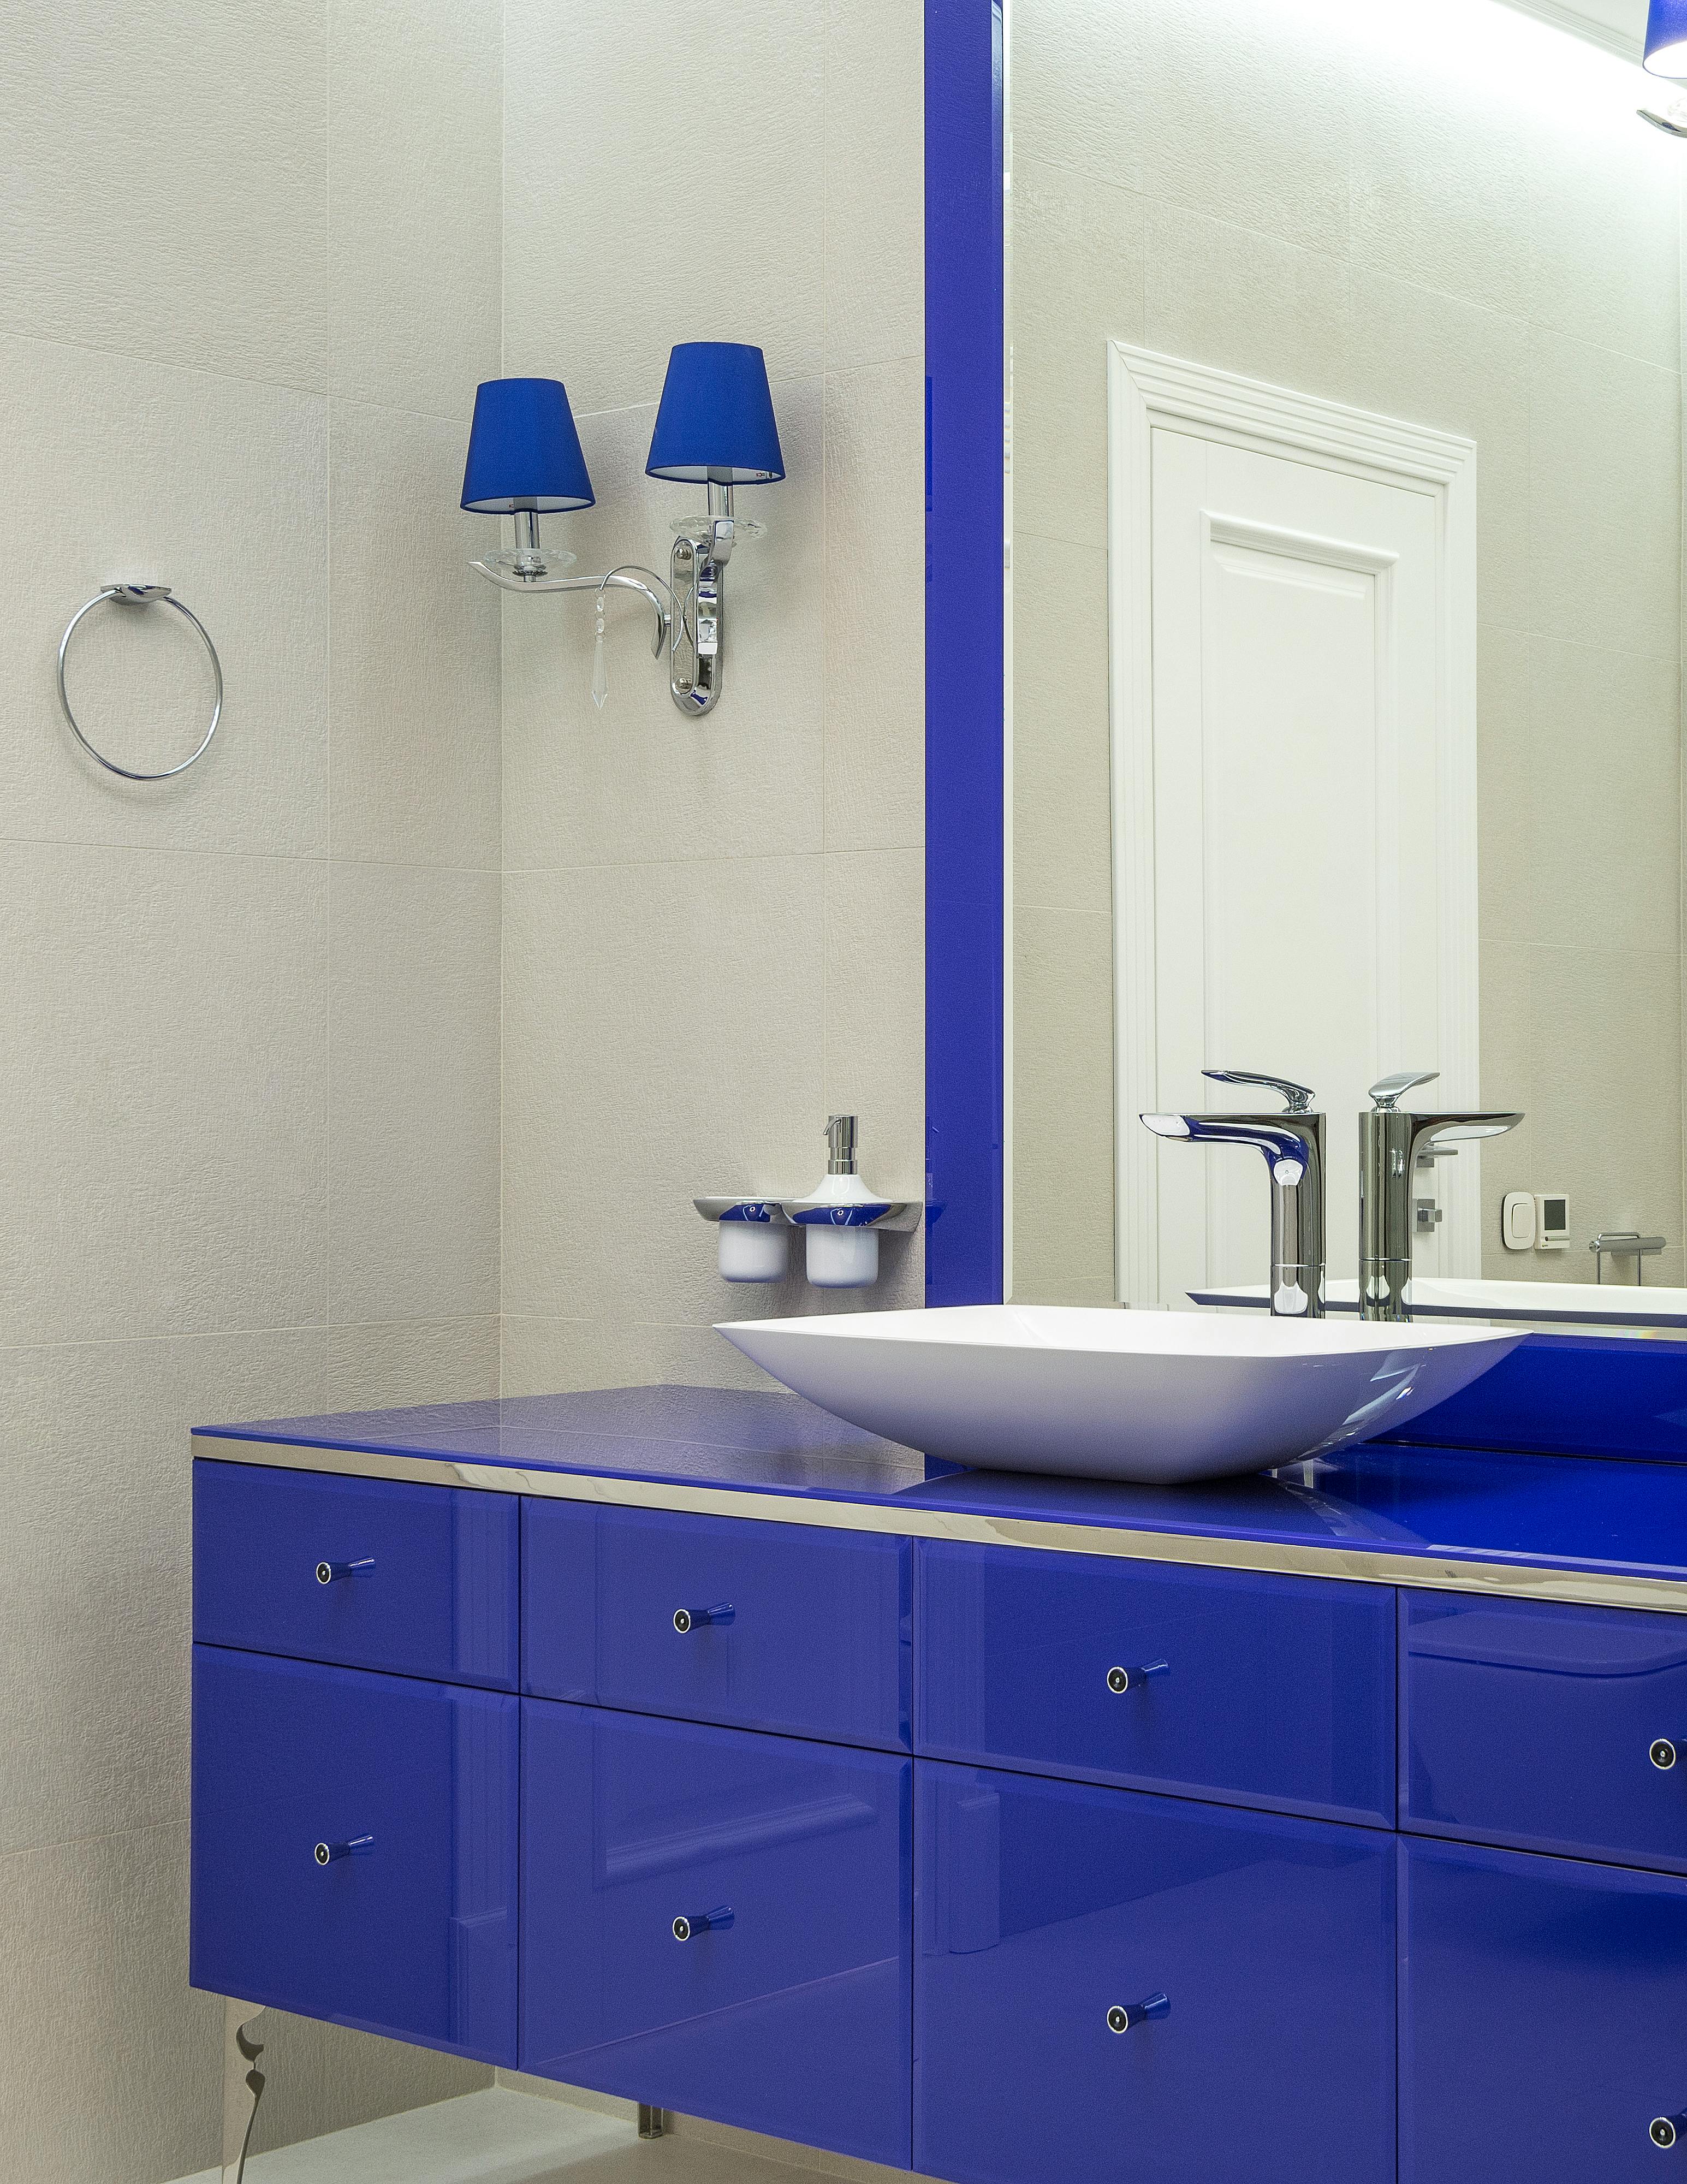 Blue furniture in modern bathroom \u00b7 Free Stock Photo